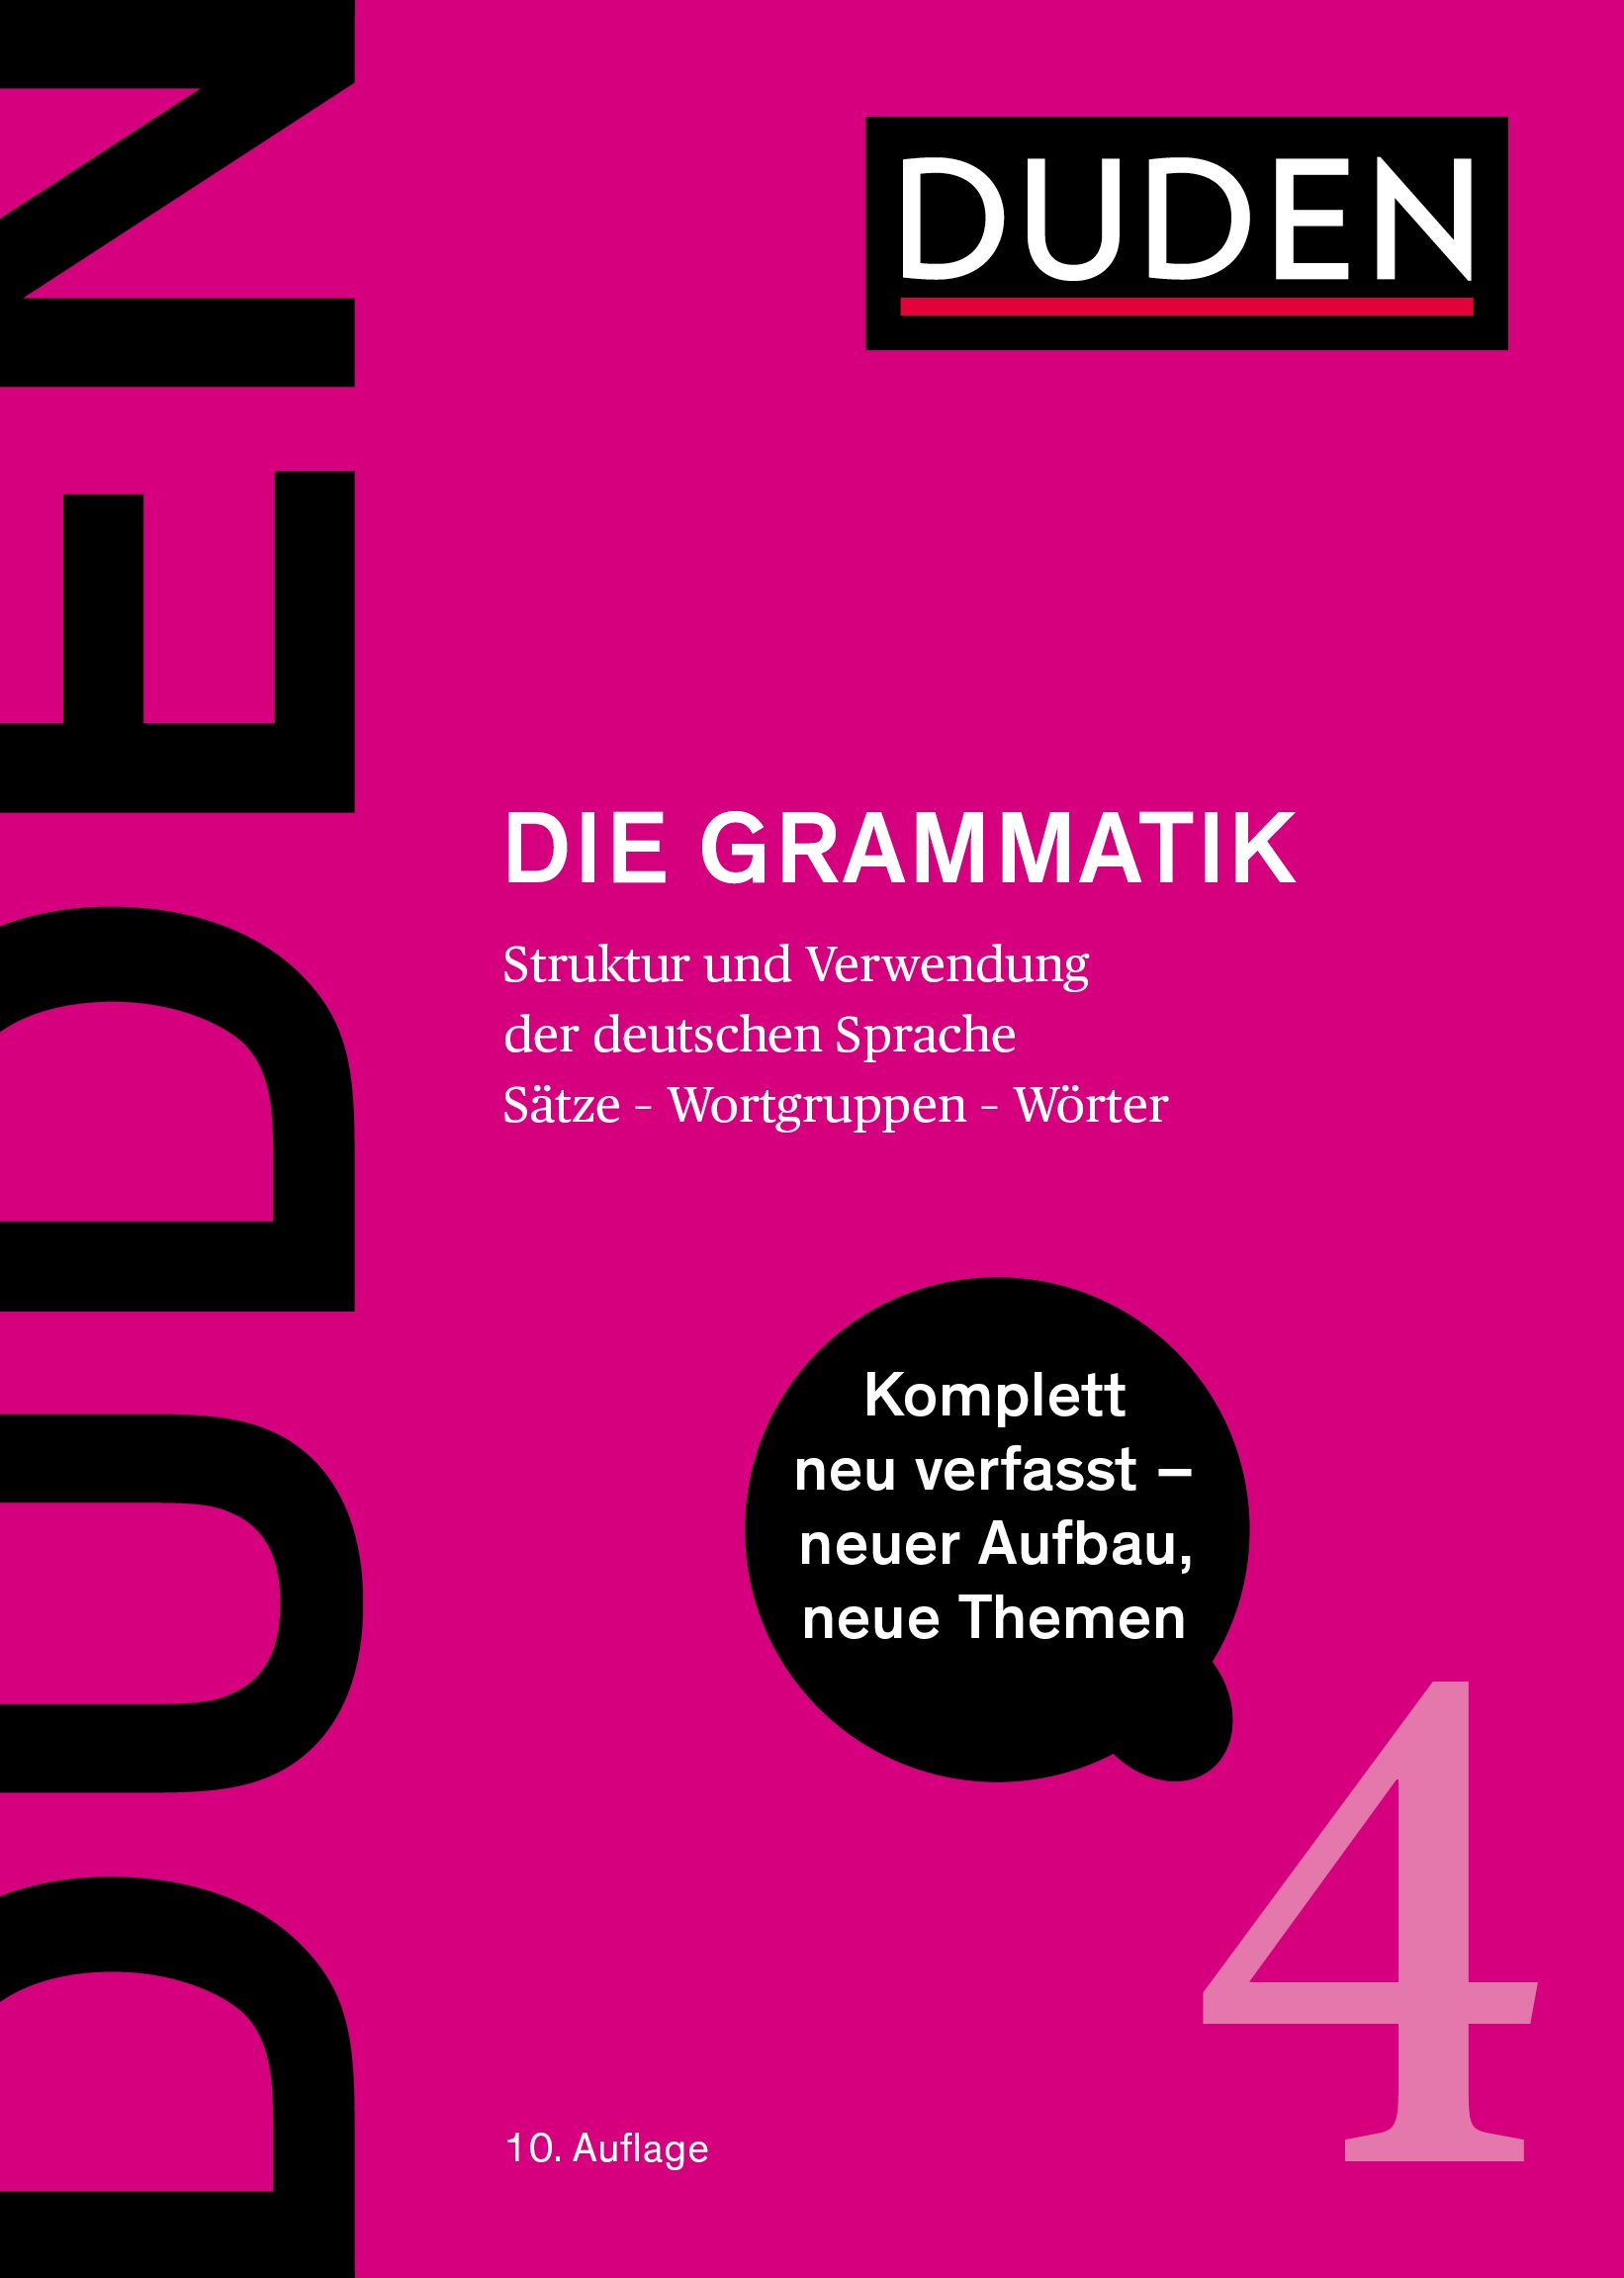 Buchcover Dudengrammatik, 10. Auflage